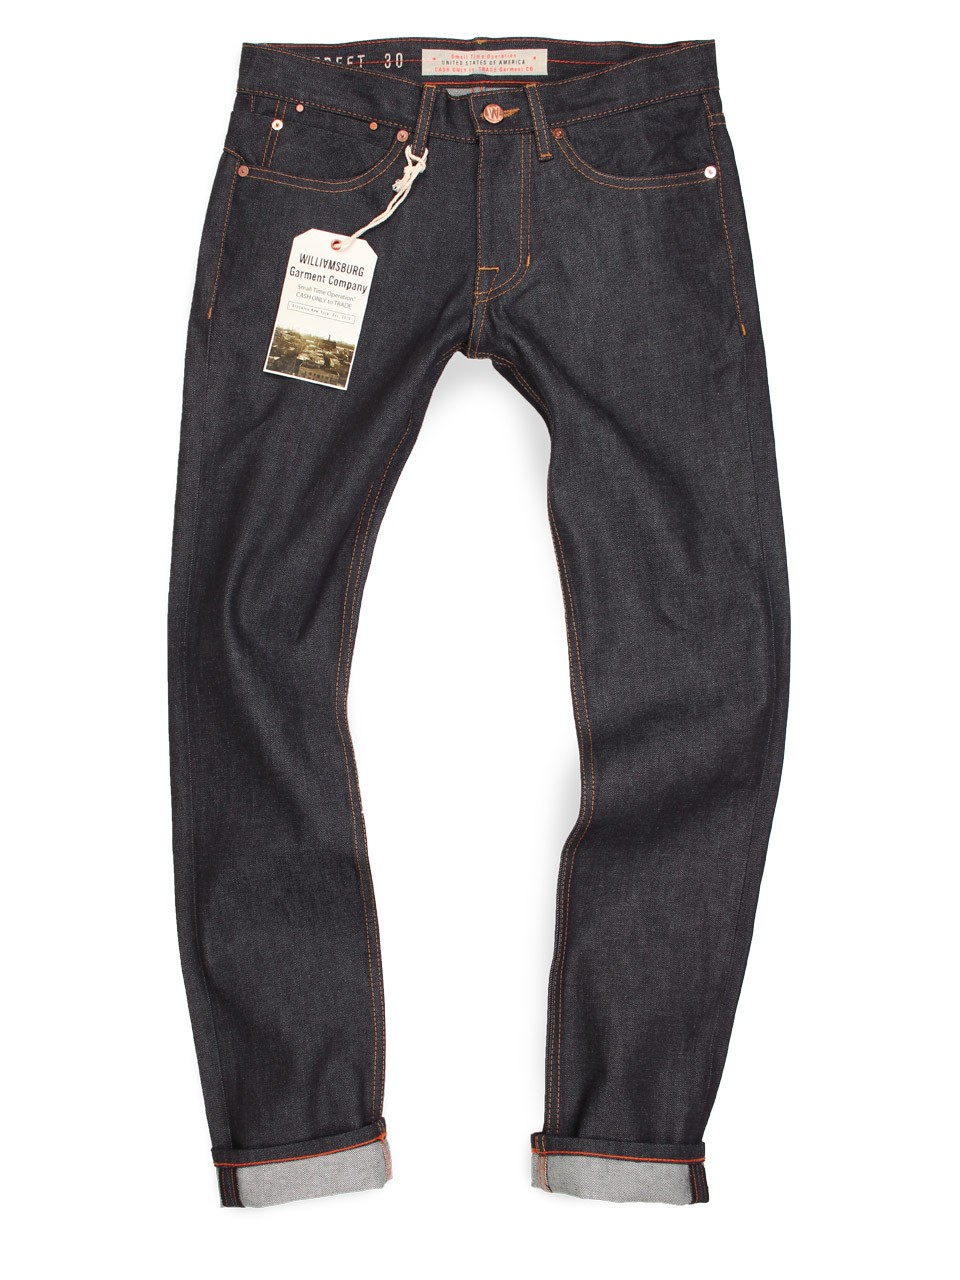 Williamsburg Garment Company Hope Street Raw Denim Skinny Jeans ...